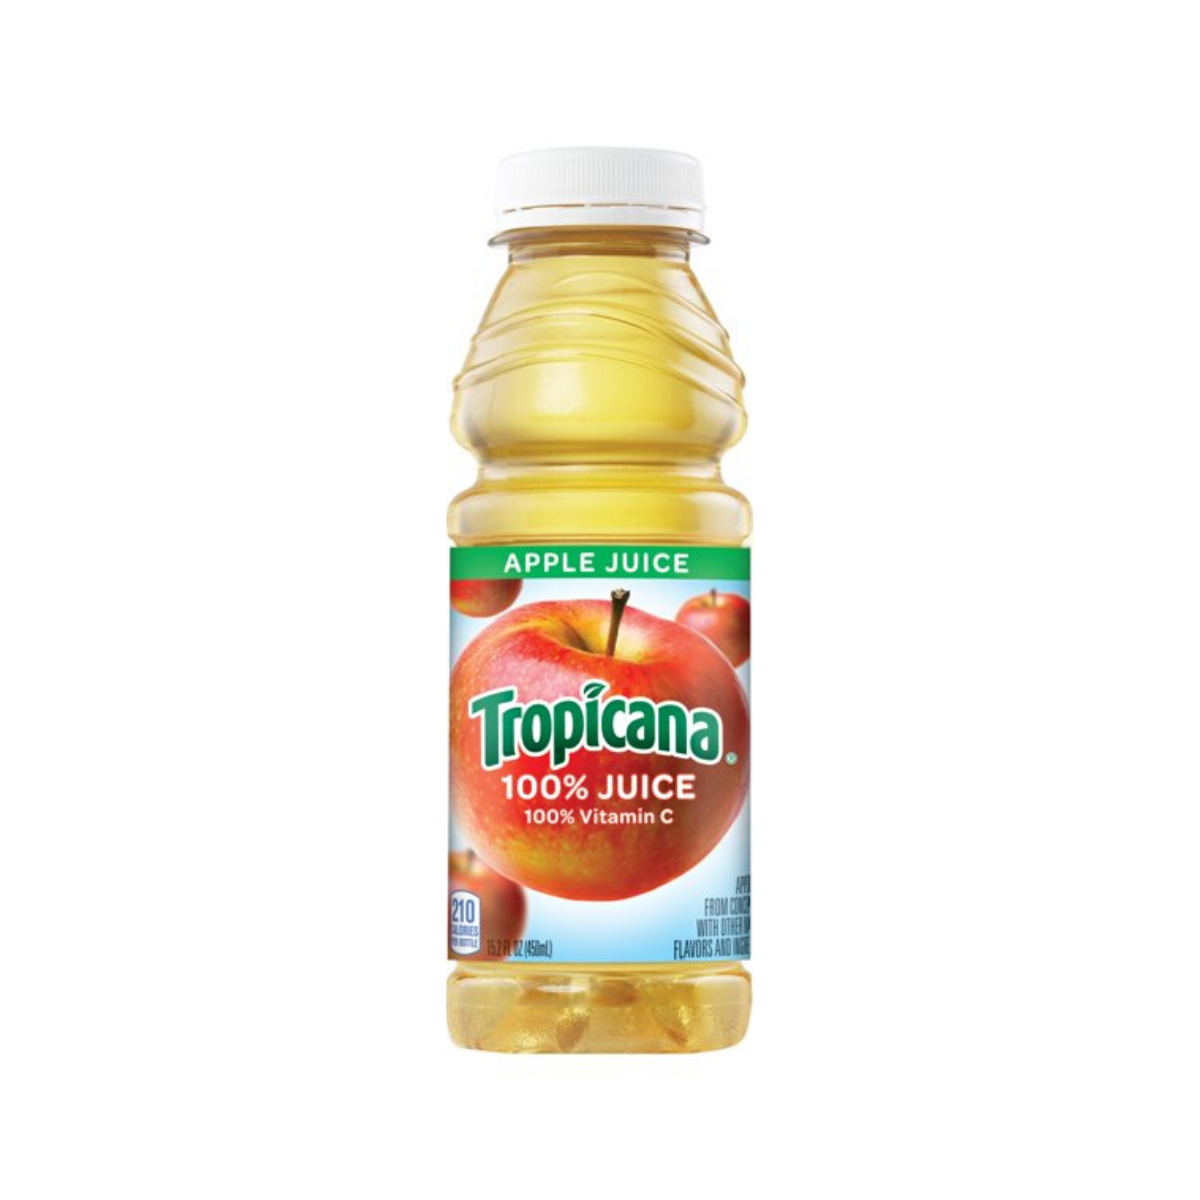 tropicana apple juice price in india